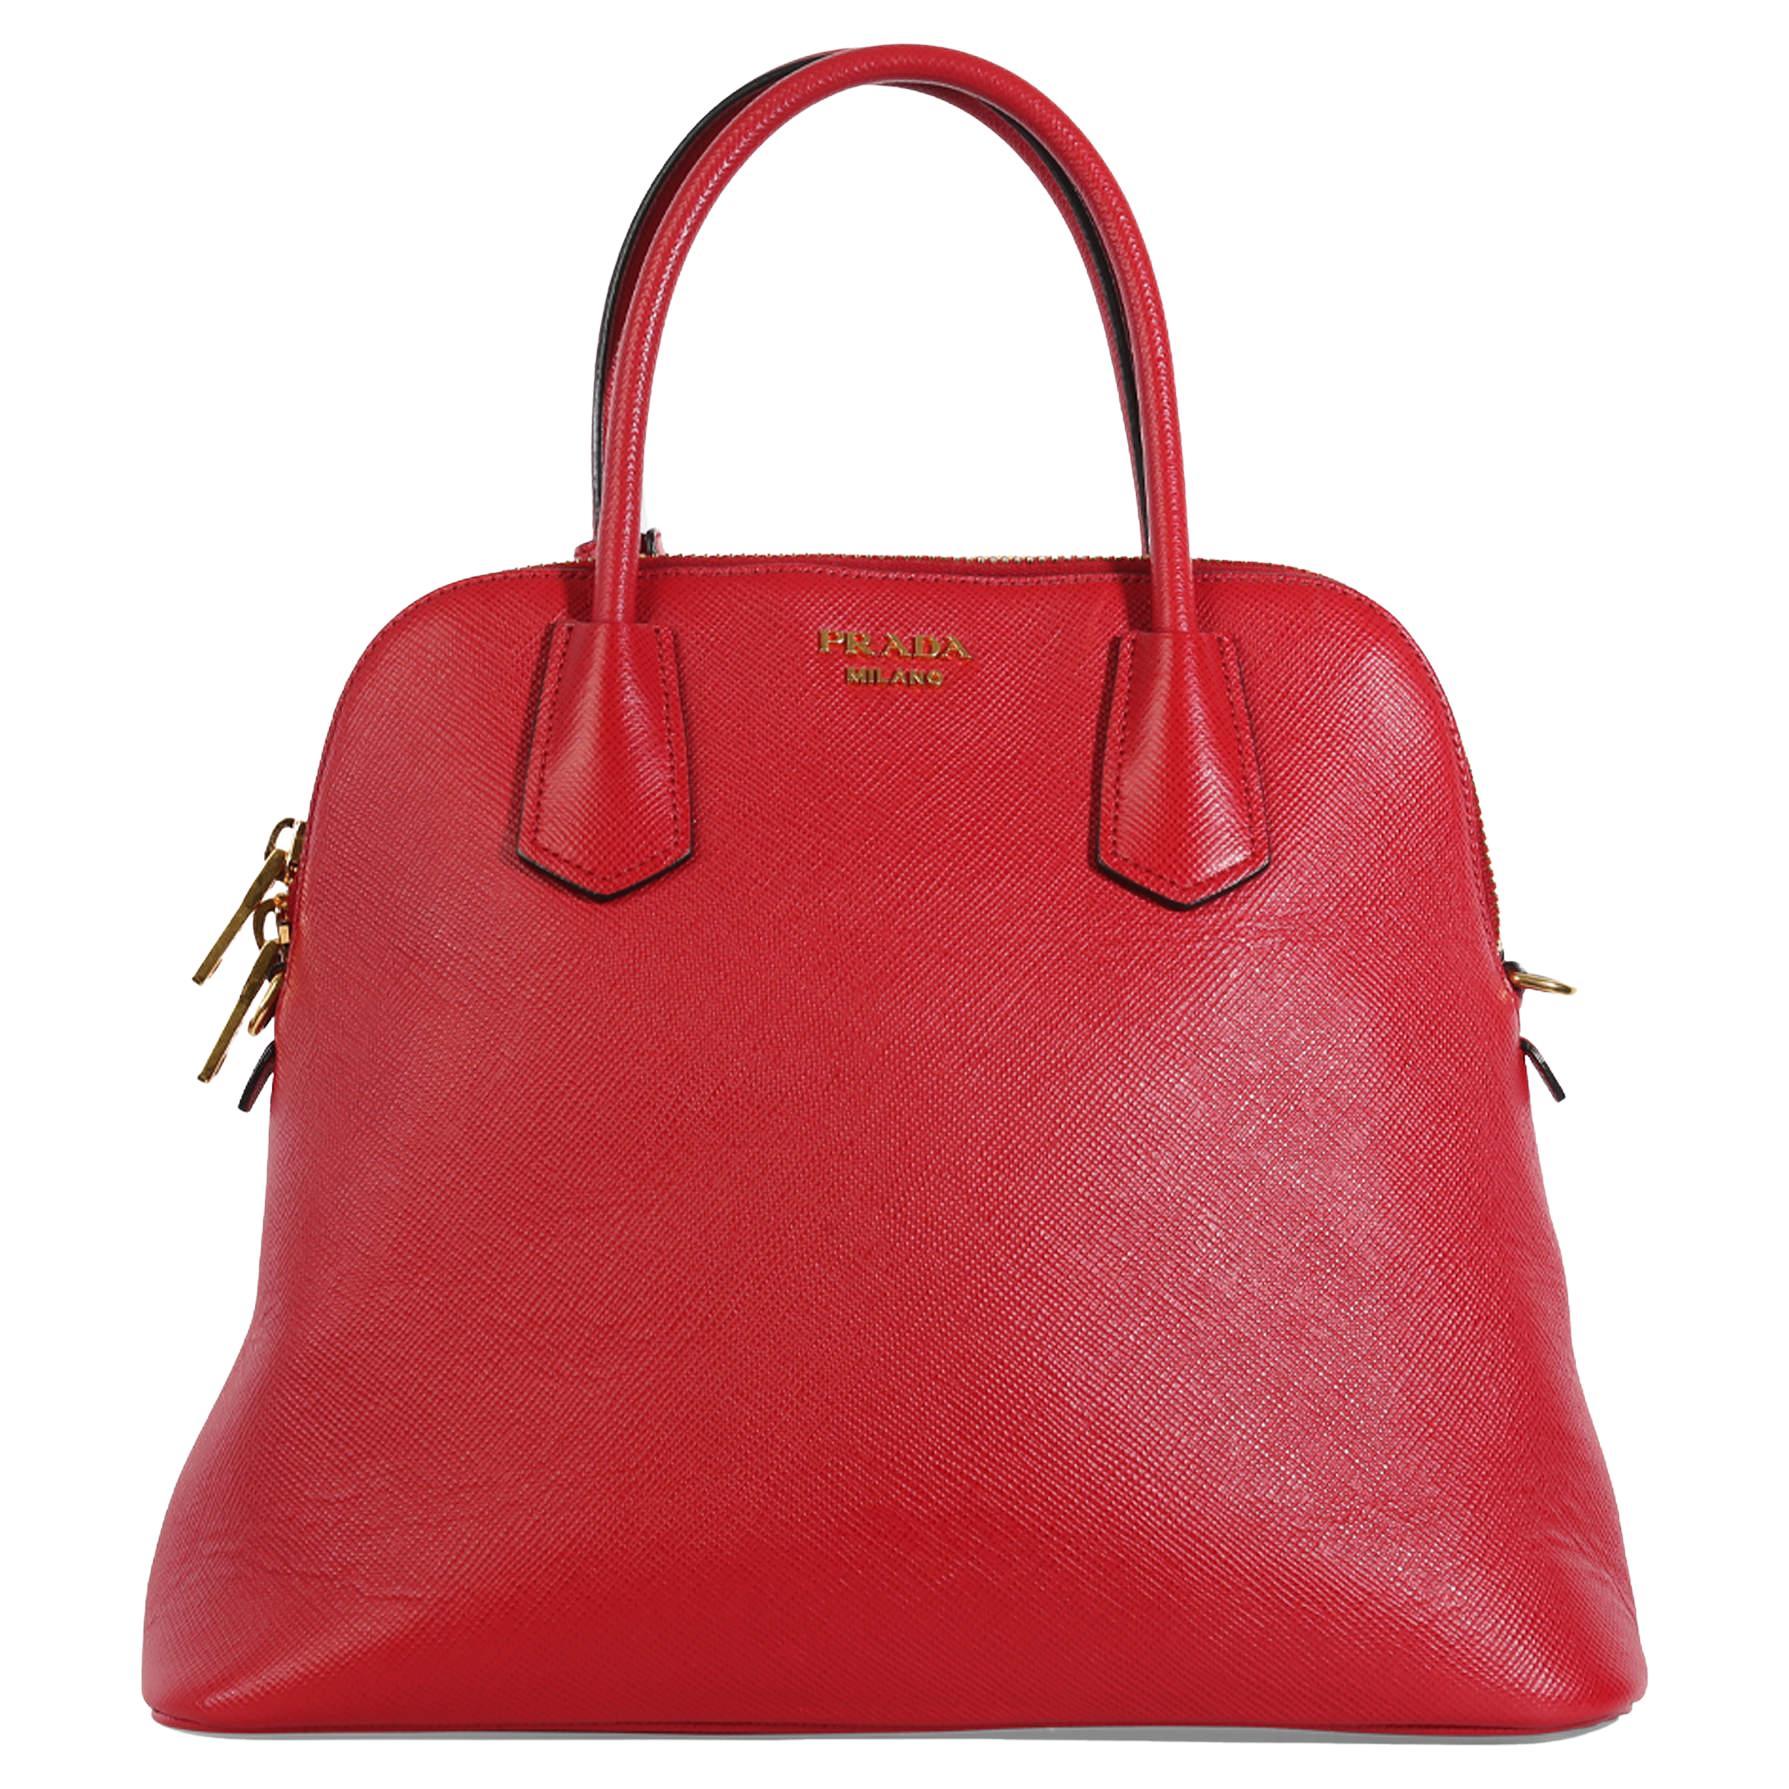 Prada Red Saffiano Leather Medium Dome Satchel Bag For Sale